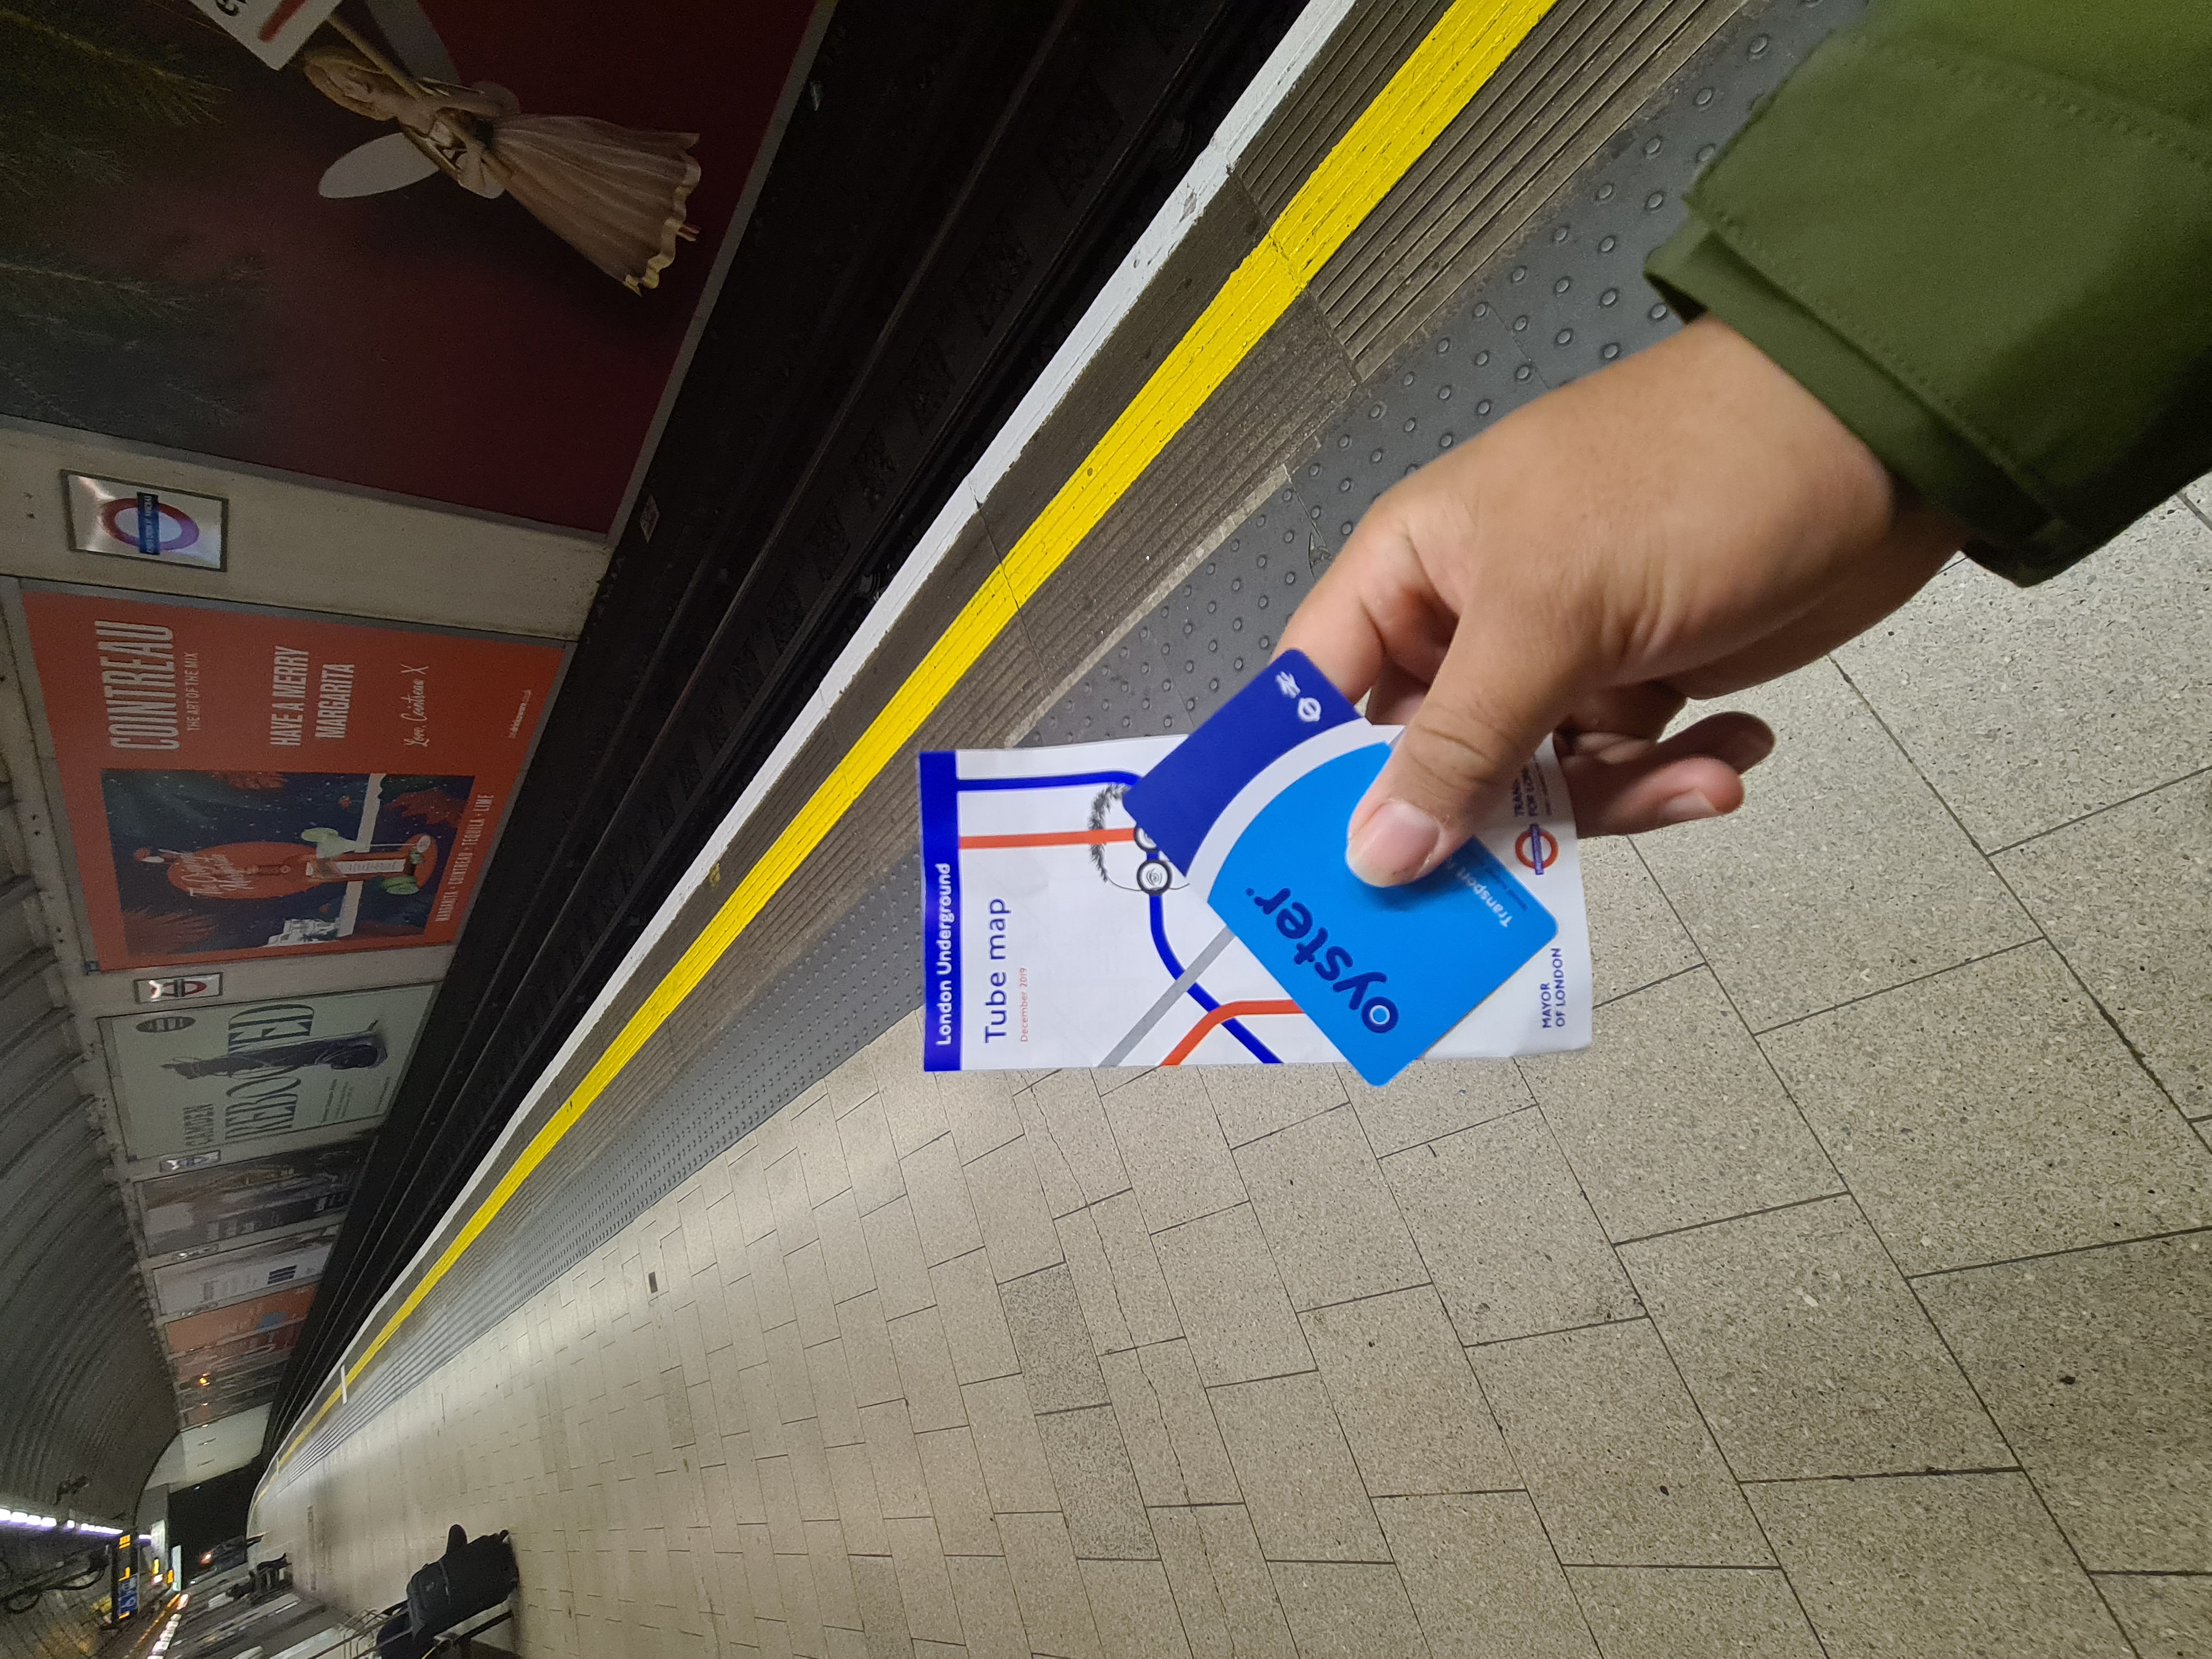 Enjoy London 16/16: Untuk dapat menaiki transportasi publik di London, kita harus memiliki kartu pembayaran yang namanya Oyster. Selain menggunakna Oyster, kita juga dapat menggunakan kartu debit/kredit yang terdapat fitur contactless payment